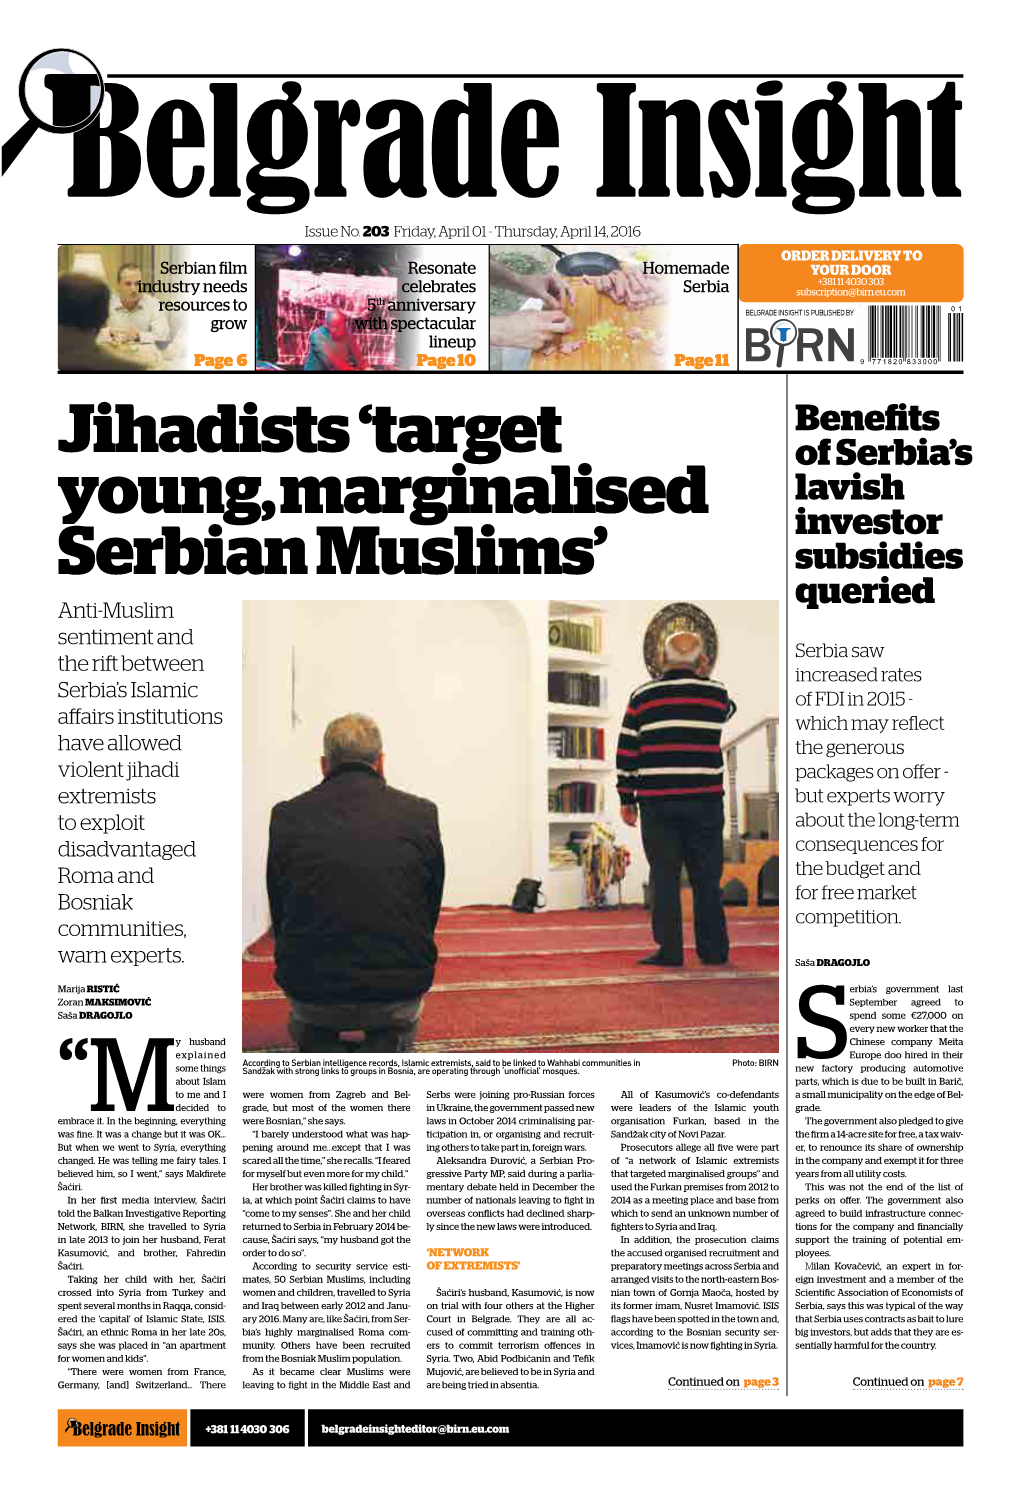 Jihadists 'Target Young, Marginalised Serbian Muslims'